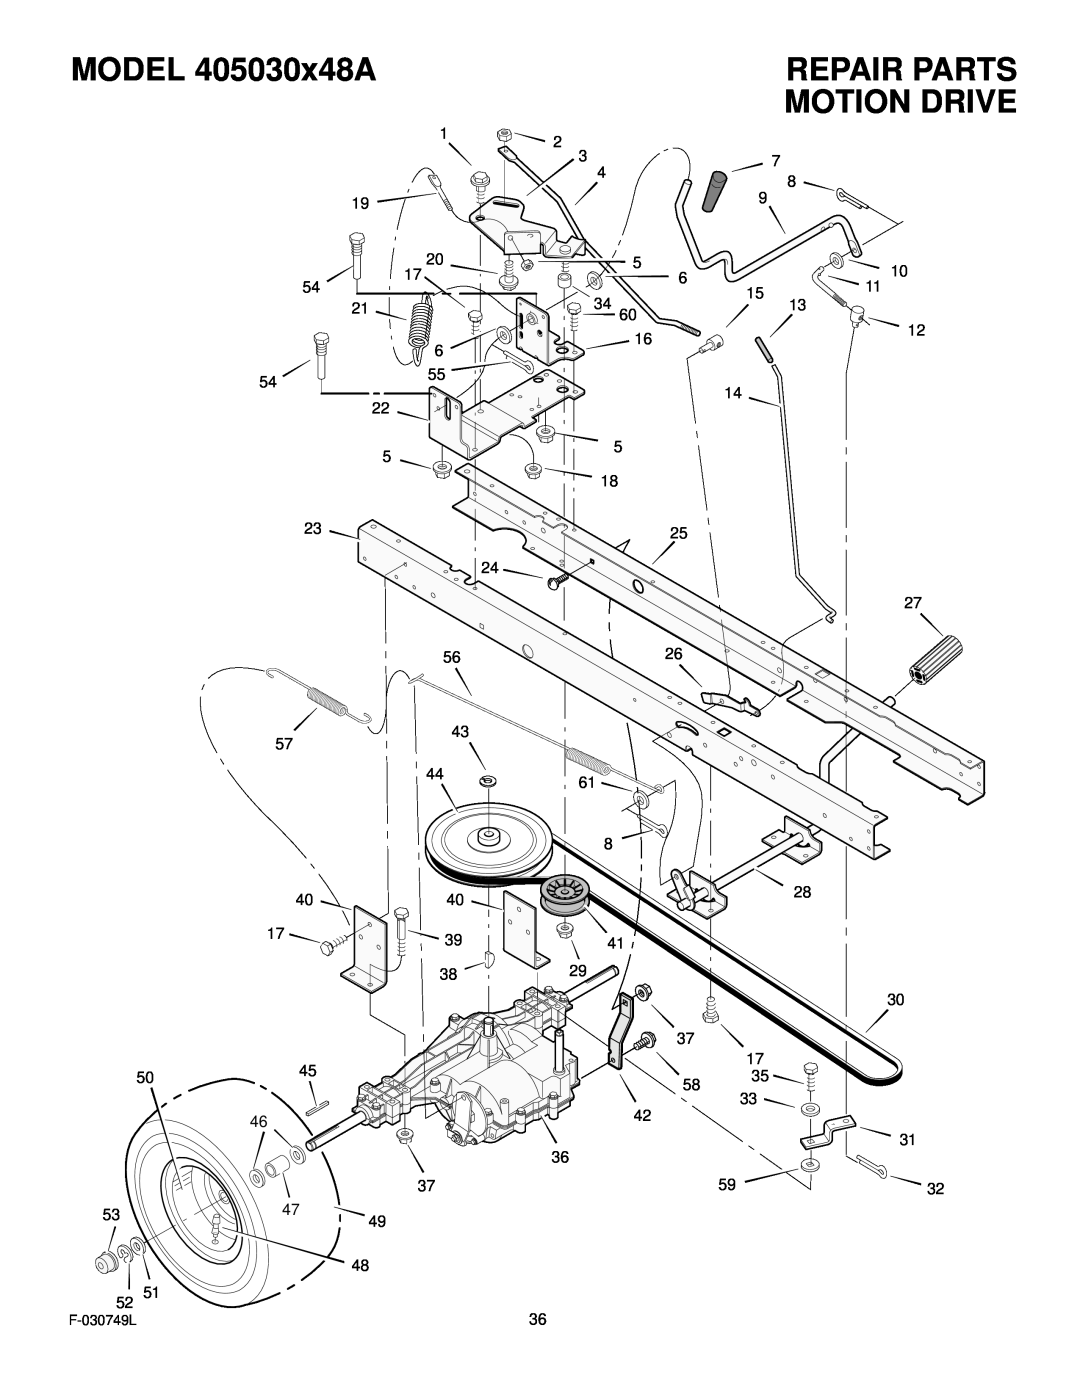 Murray manual Motion Drive, MODEL 405030x48A, Repair Parts, F-030749L 